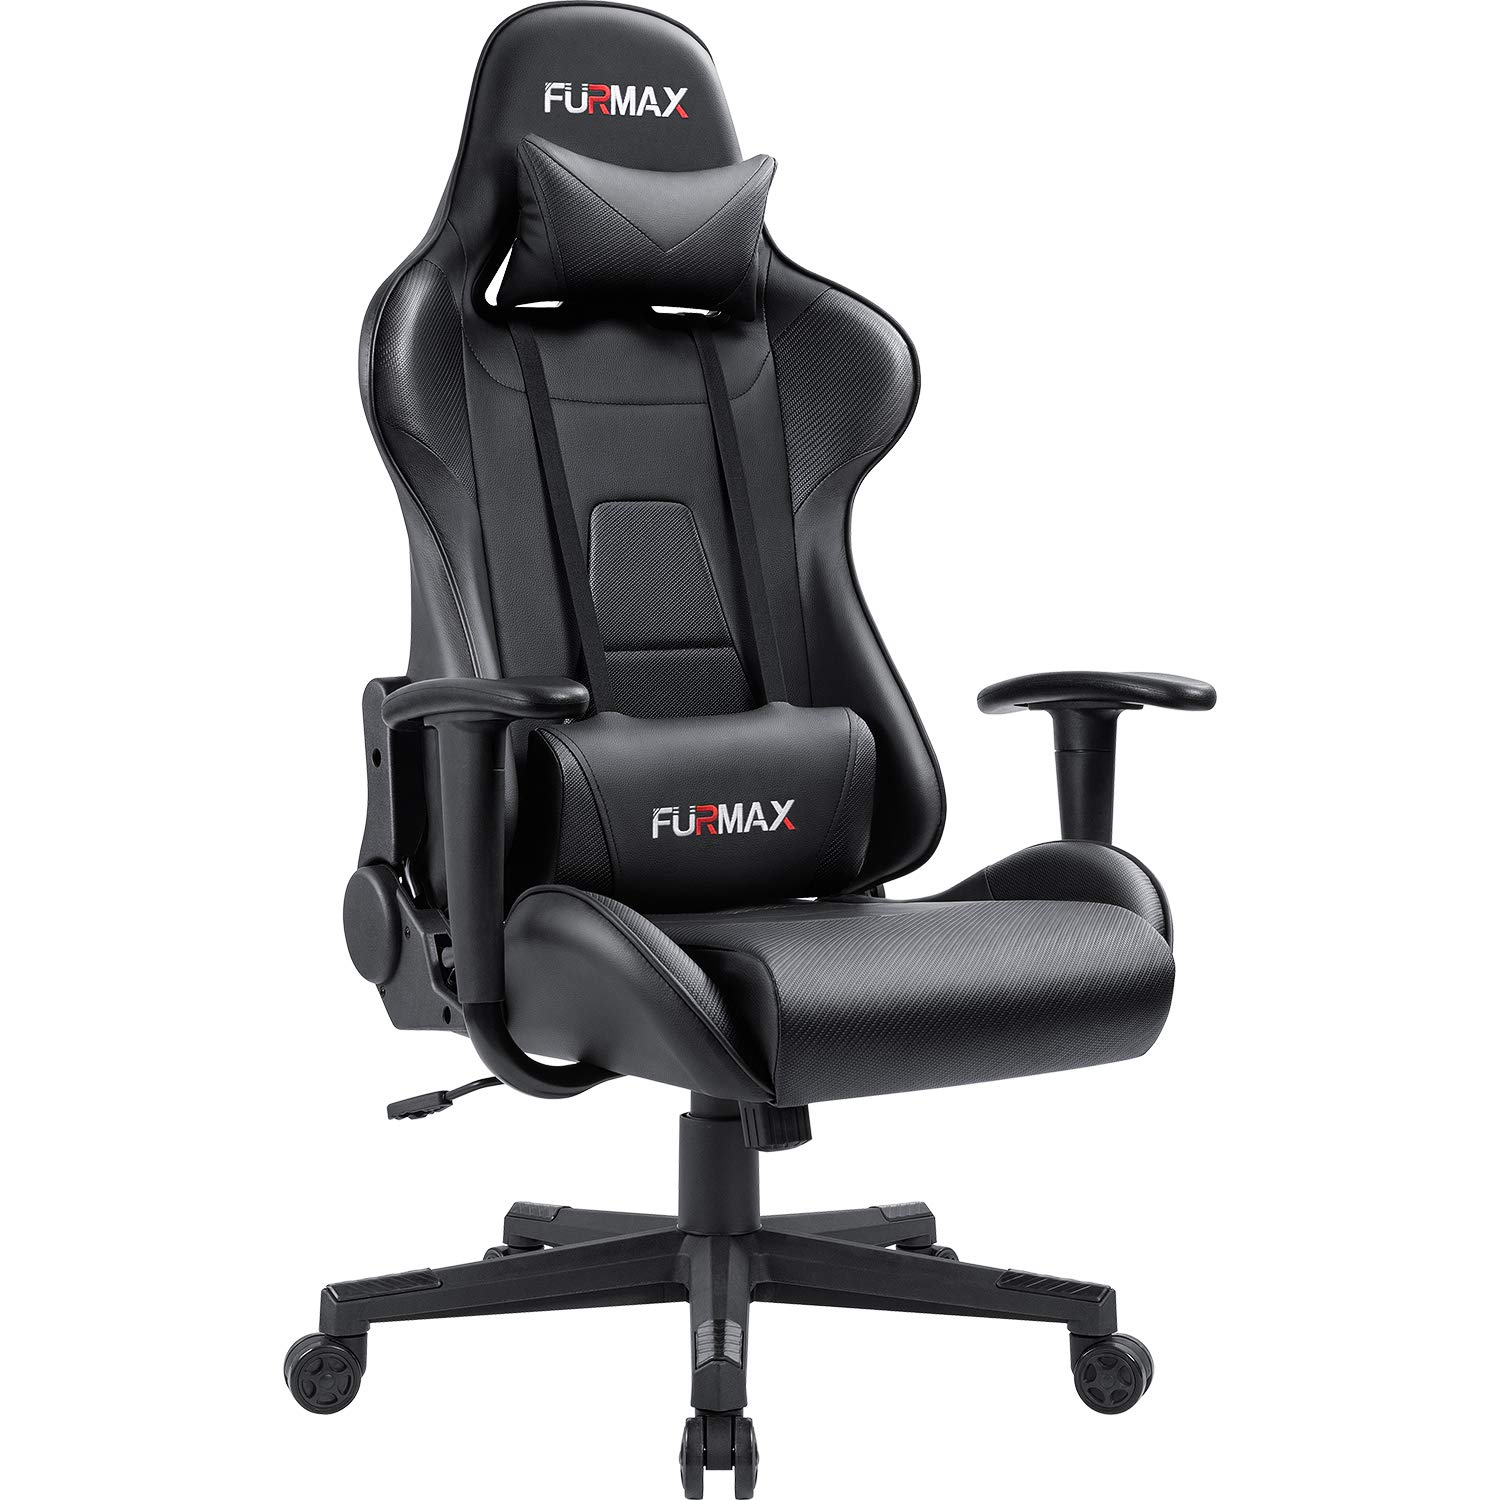 Furmax Gaming Office Chair Ergonomic HighBack Racing